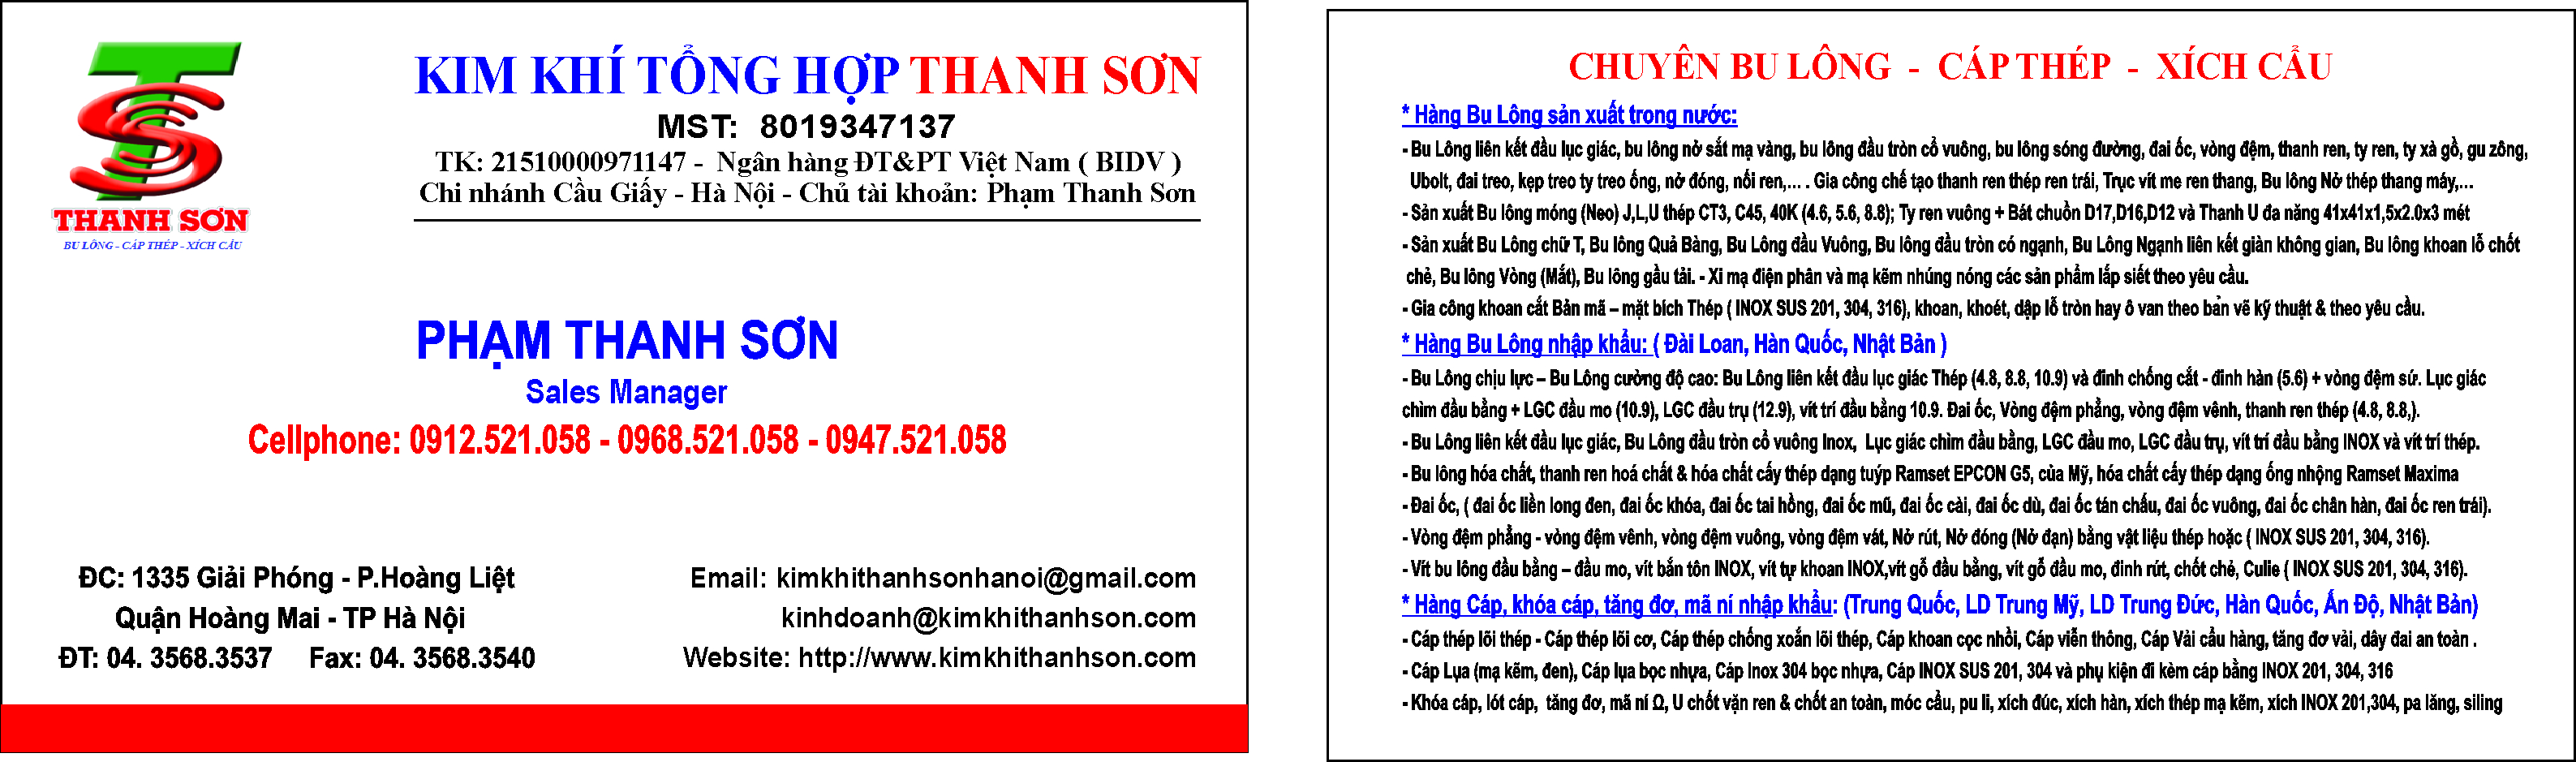 Card Thanh Sơn 12.07.2016 OK